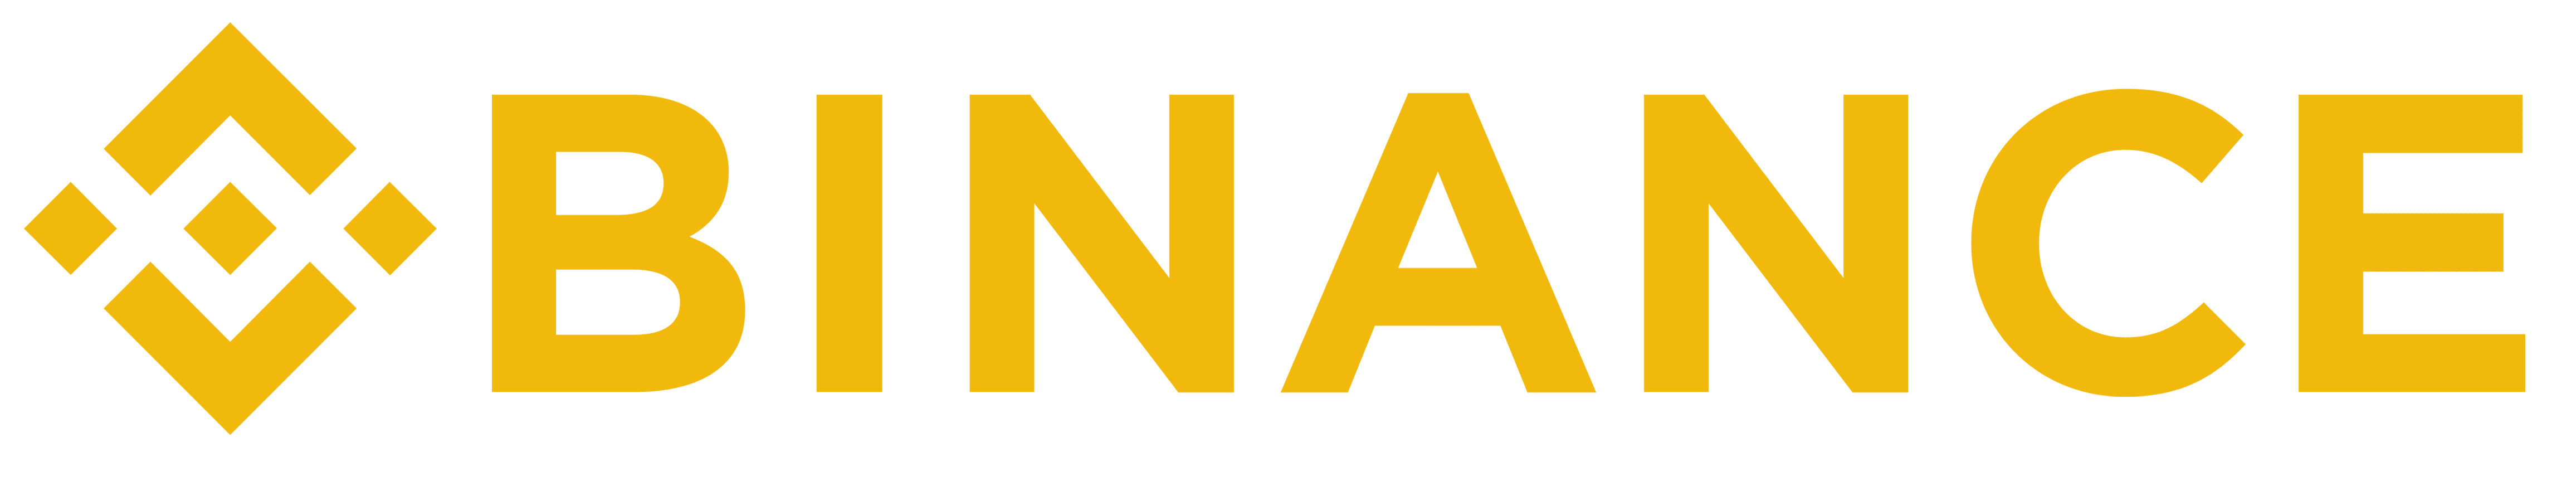 Binance-logo-2